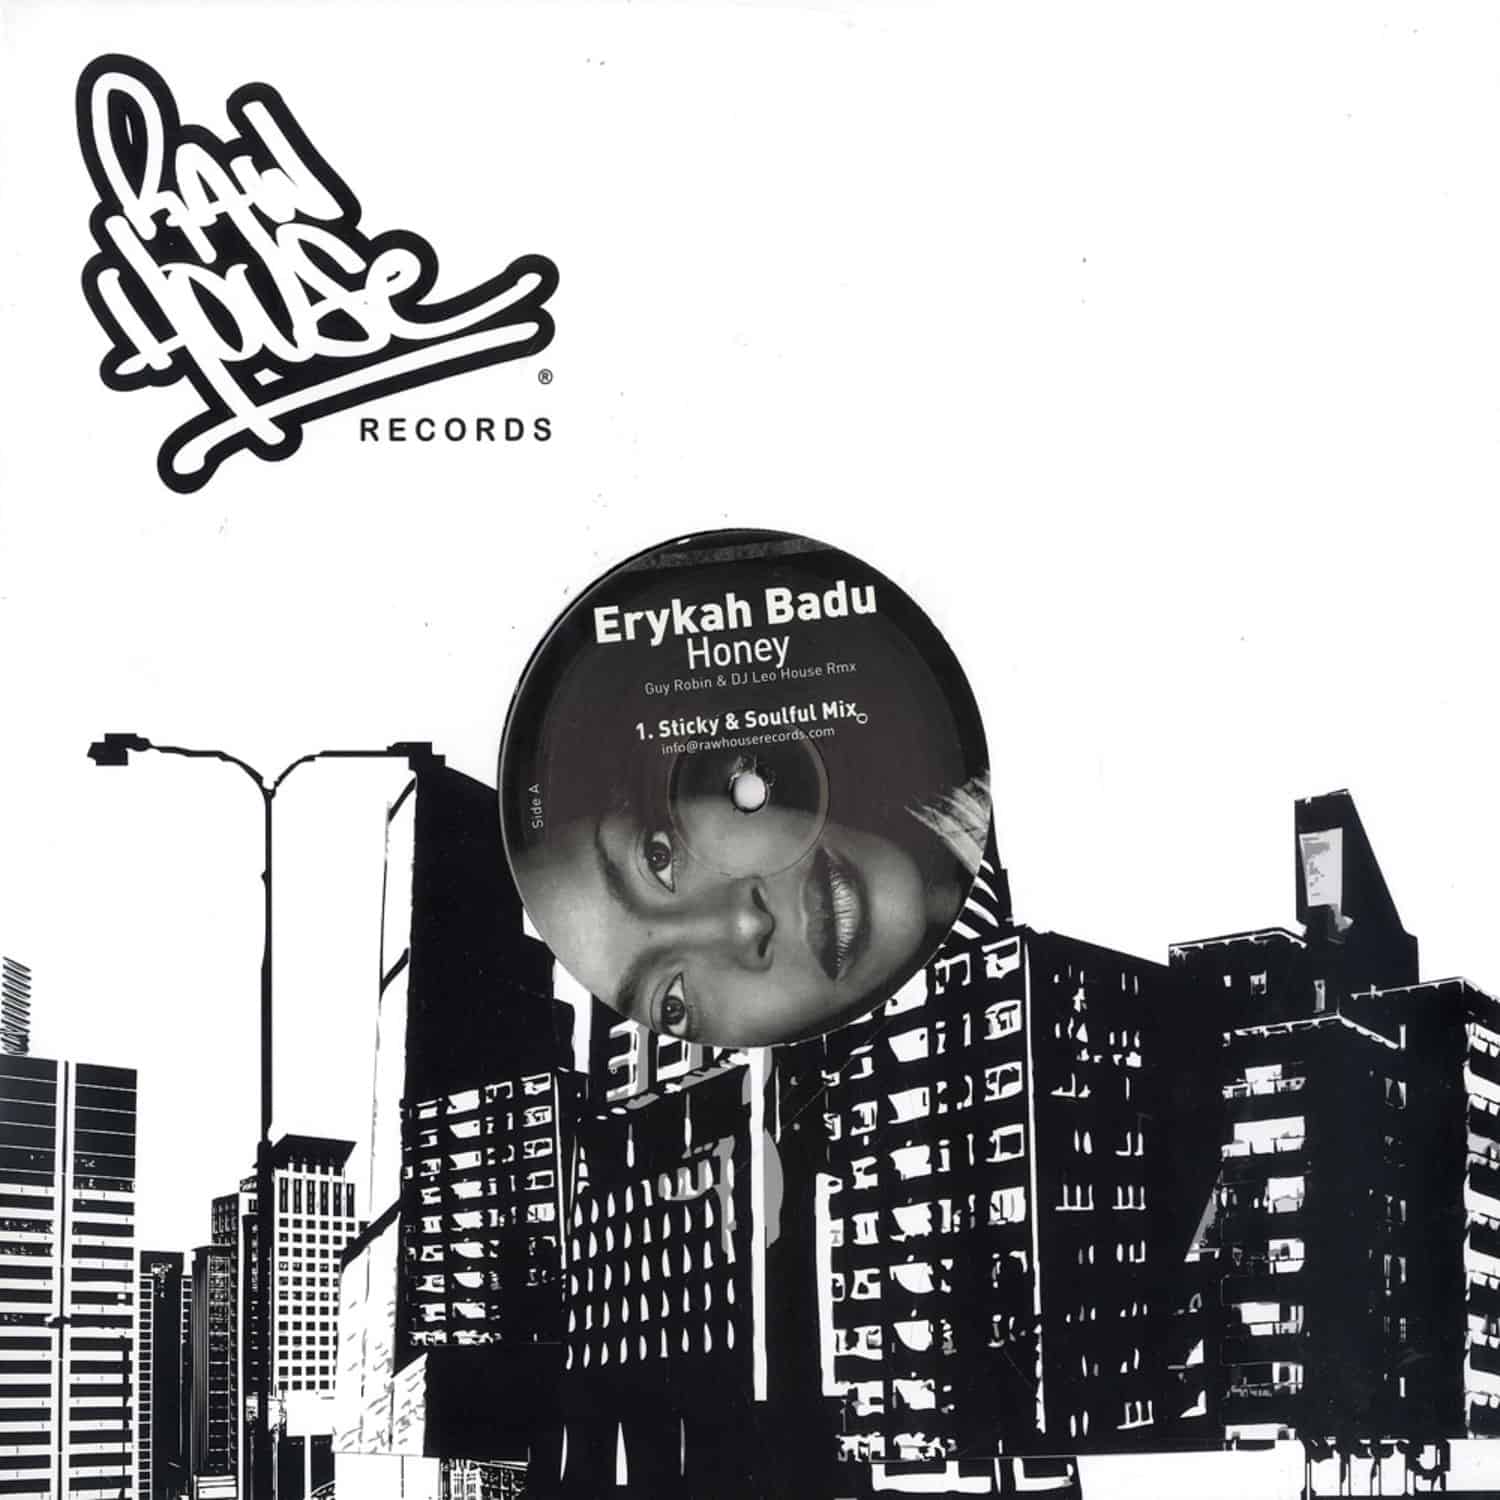 Erykah Badu - HONEY / GUY ROBIN & DJ LEO HOUSE REMIXES